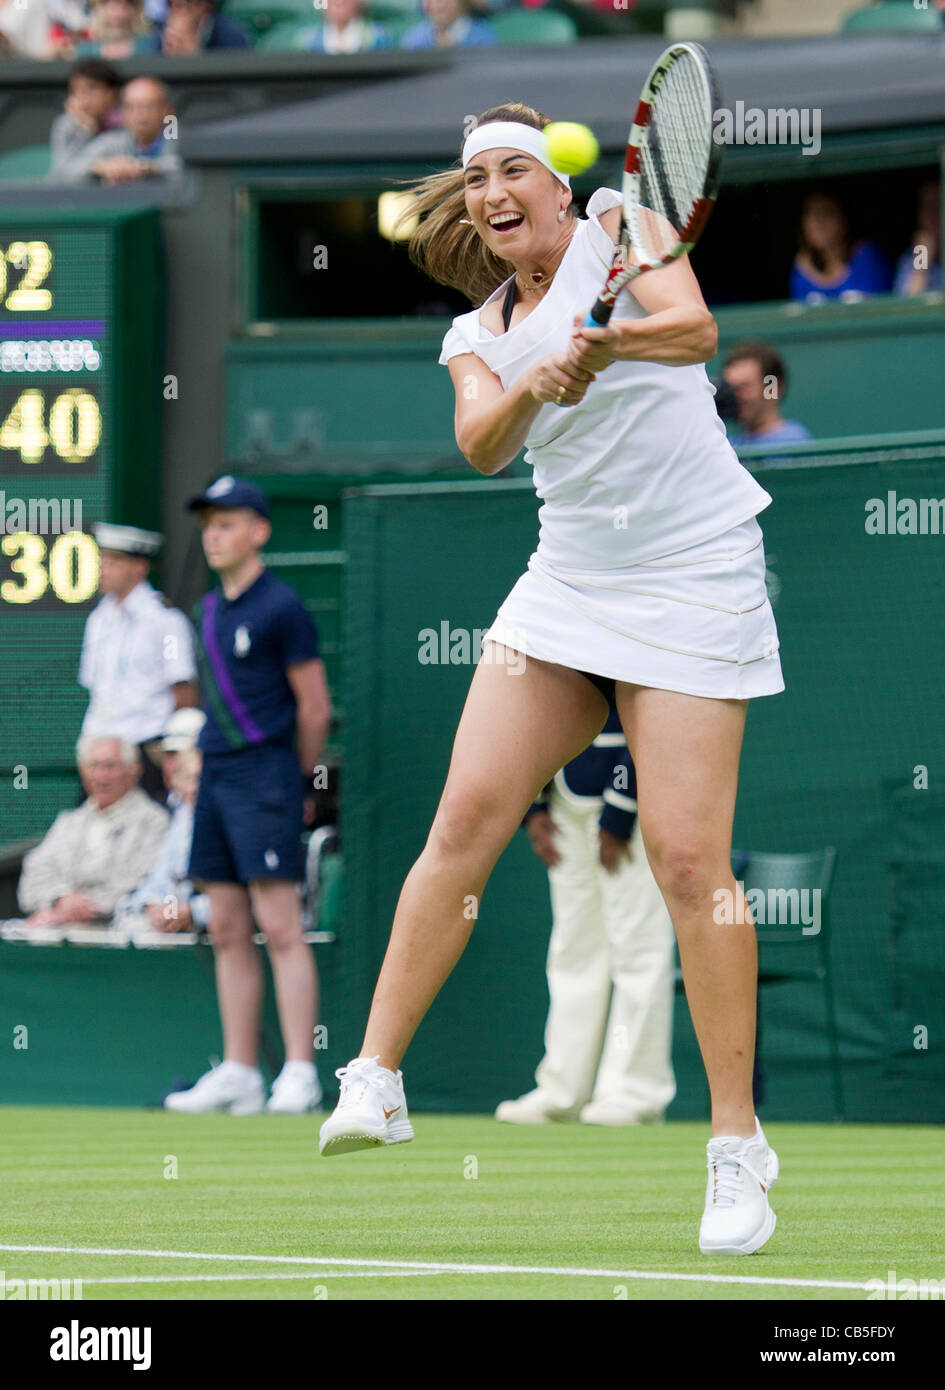 21.06.2011. Aravane Rezai FRA V Serena Williams USA (7). Aravane in Aktion. Das Tennisturnier von Wimbledon. Stockfoto